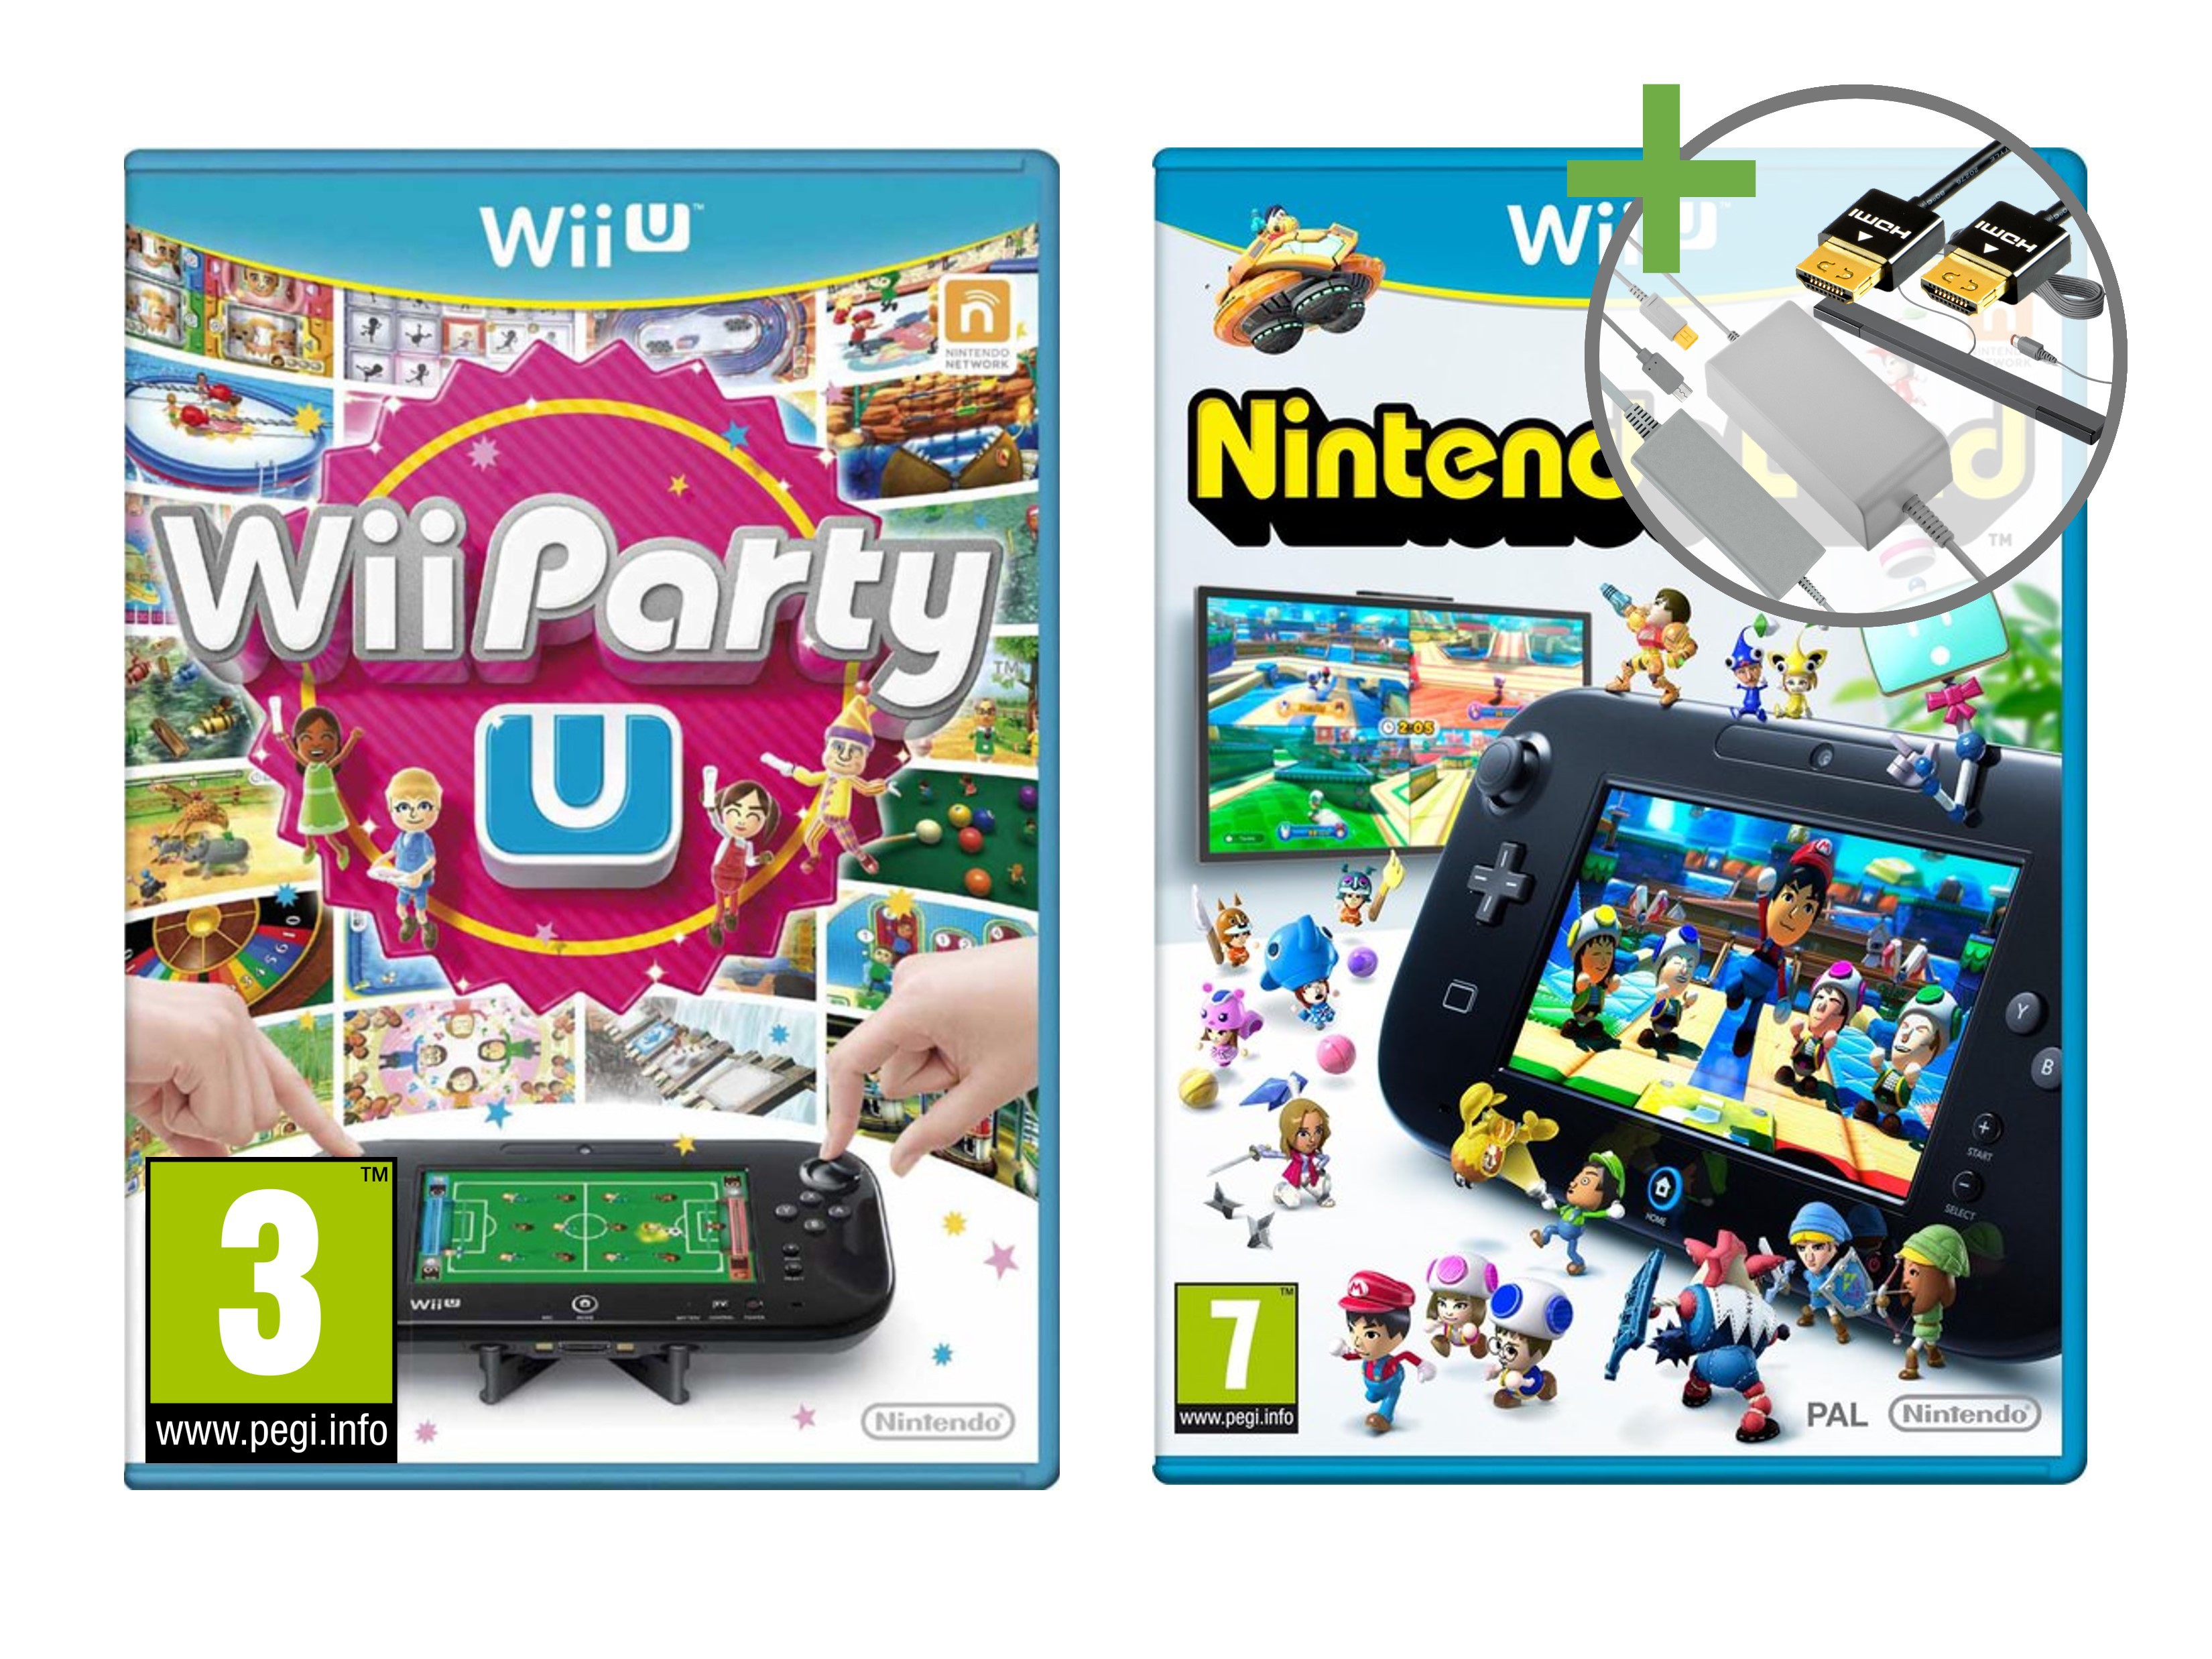 Nintendo Wii U Starter Pack - Wii Party U Edition - Wii U Hardware - 5